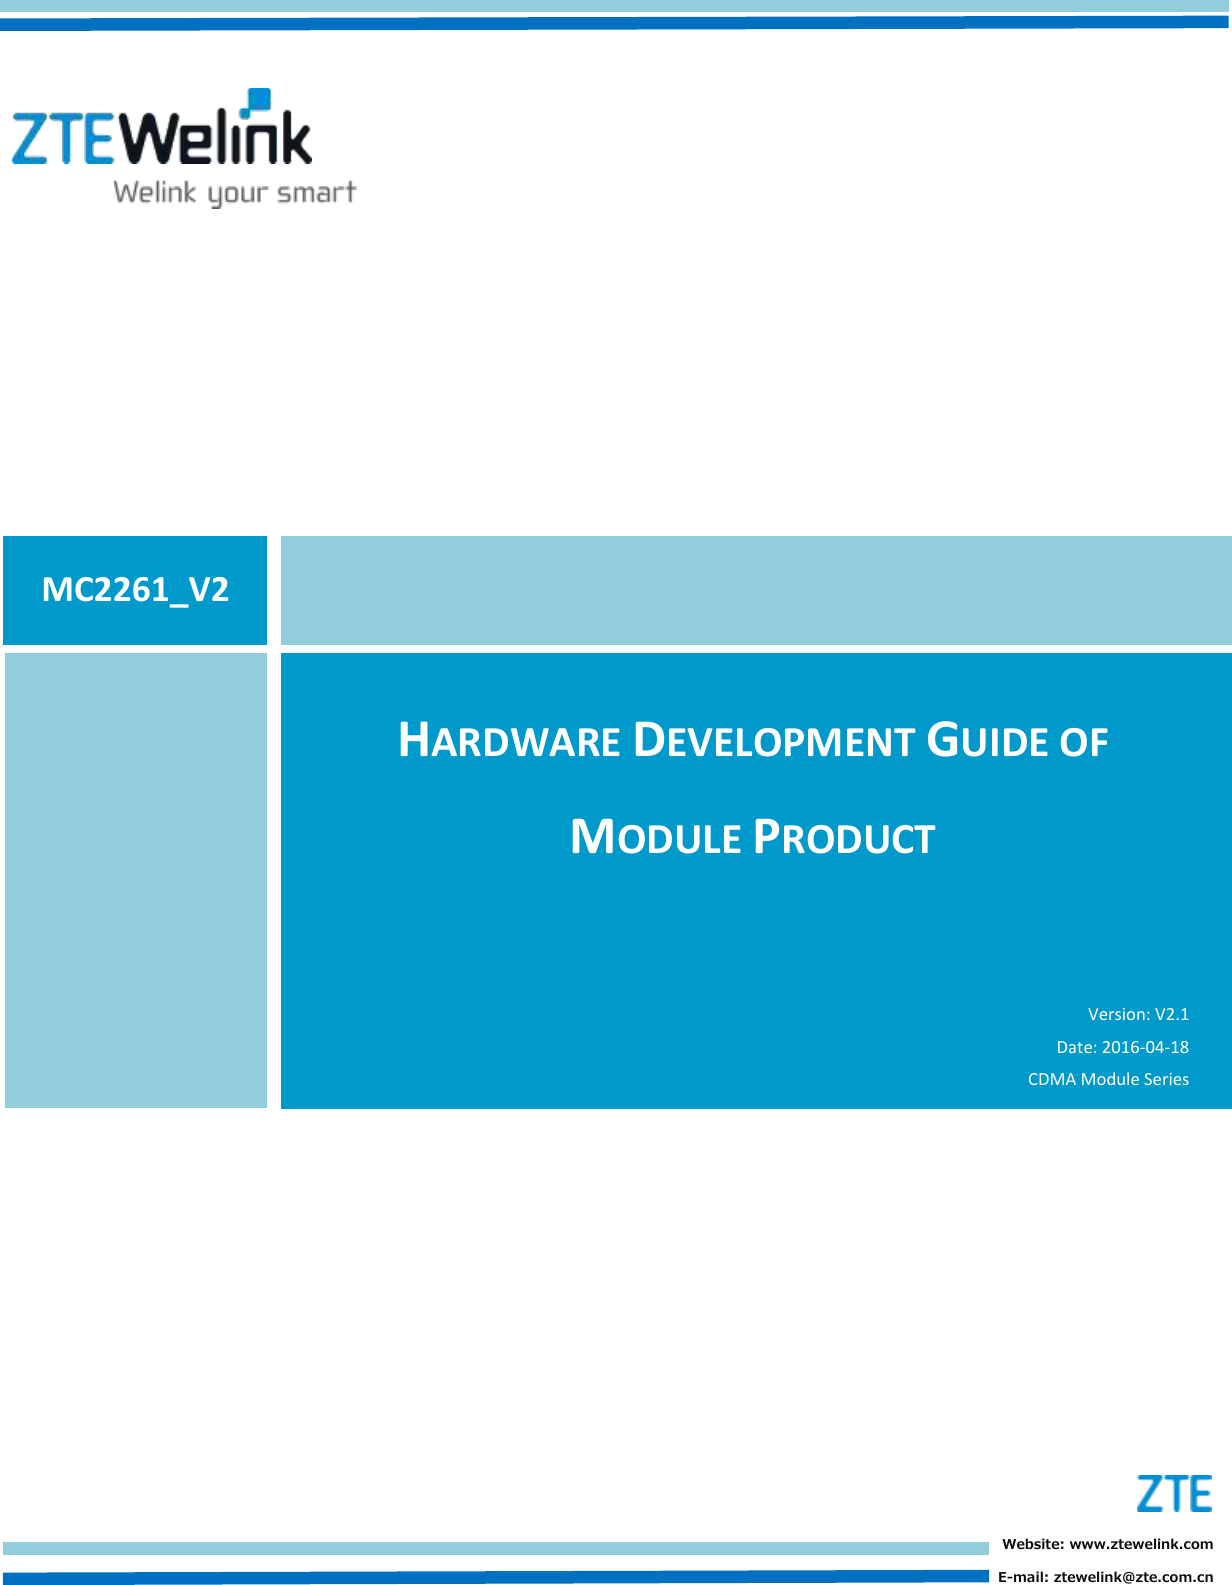                                         HARDWARE DEVELOPMENT GUIDE OF MODULE PRODUCT  Version: V2.1   Date: 2016-04-18 CDMA Module Series MC2261_V2 Website: www.ztewelink.com E-mail: ztewelink@zte.com.cn 